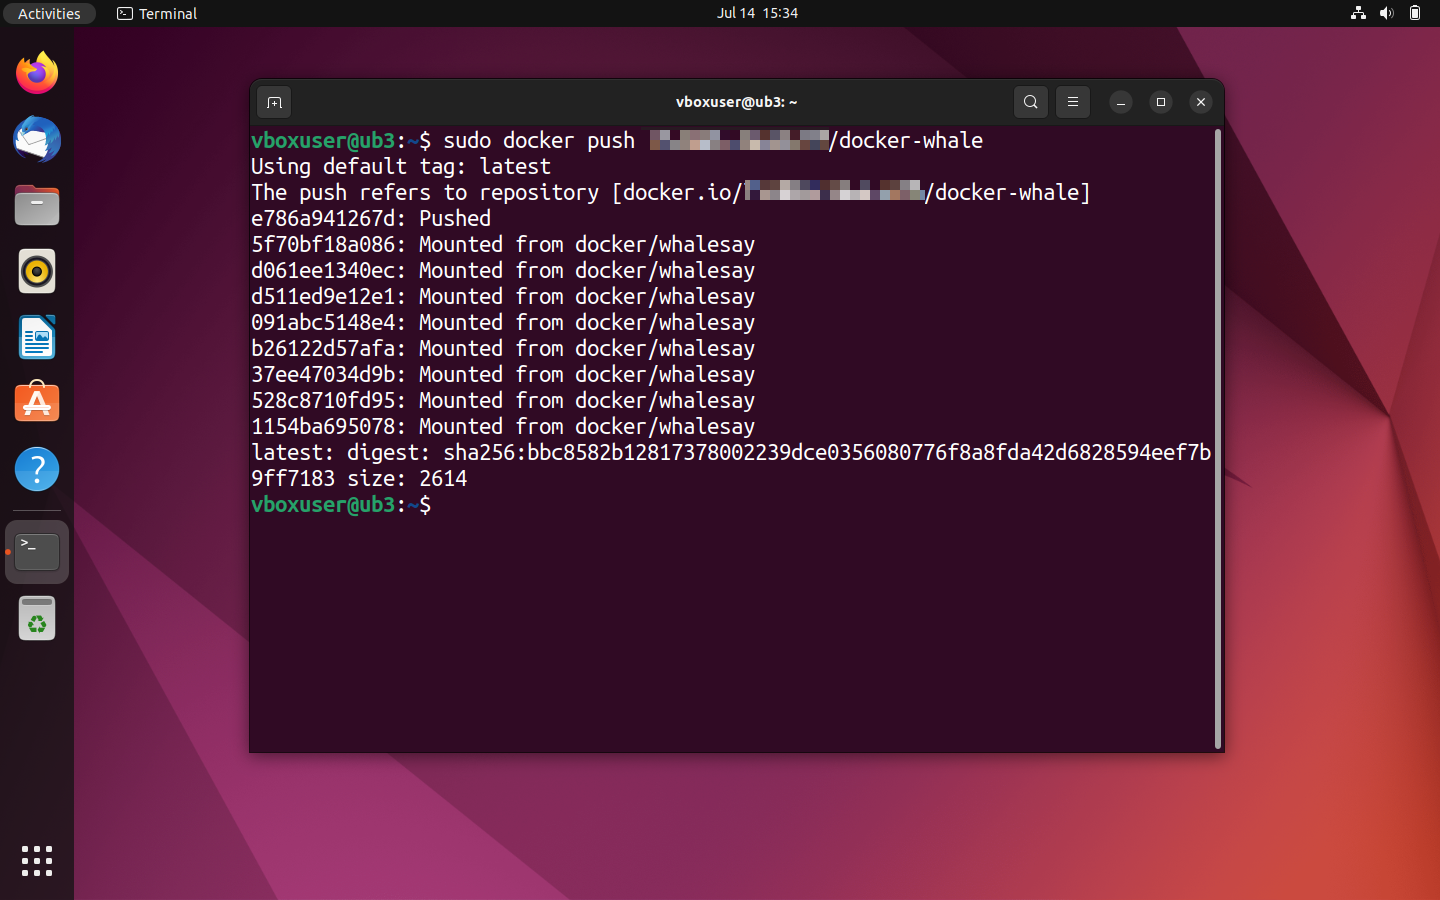 Ubuntu terminal: Status message of the image upload